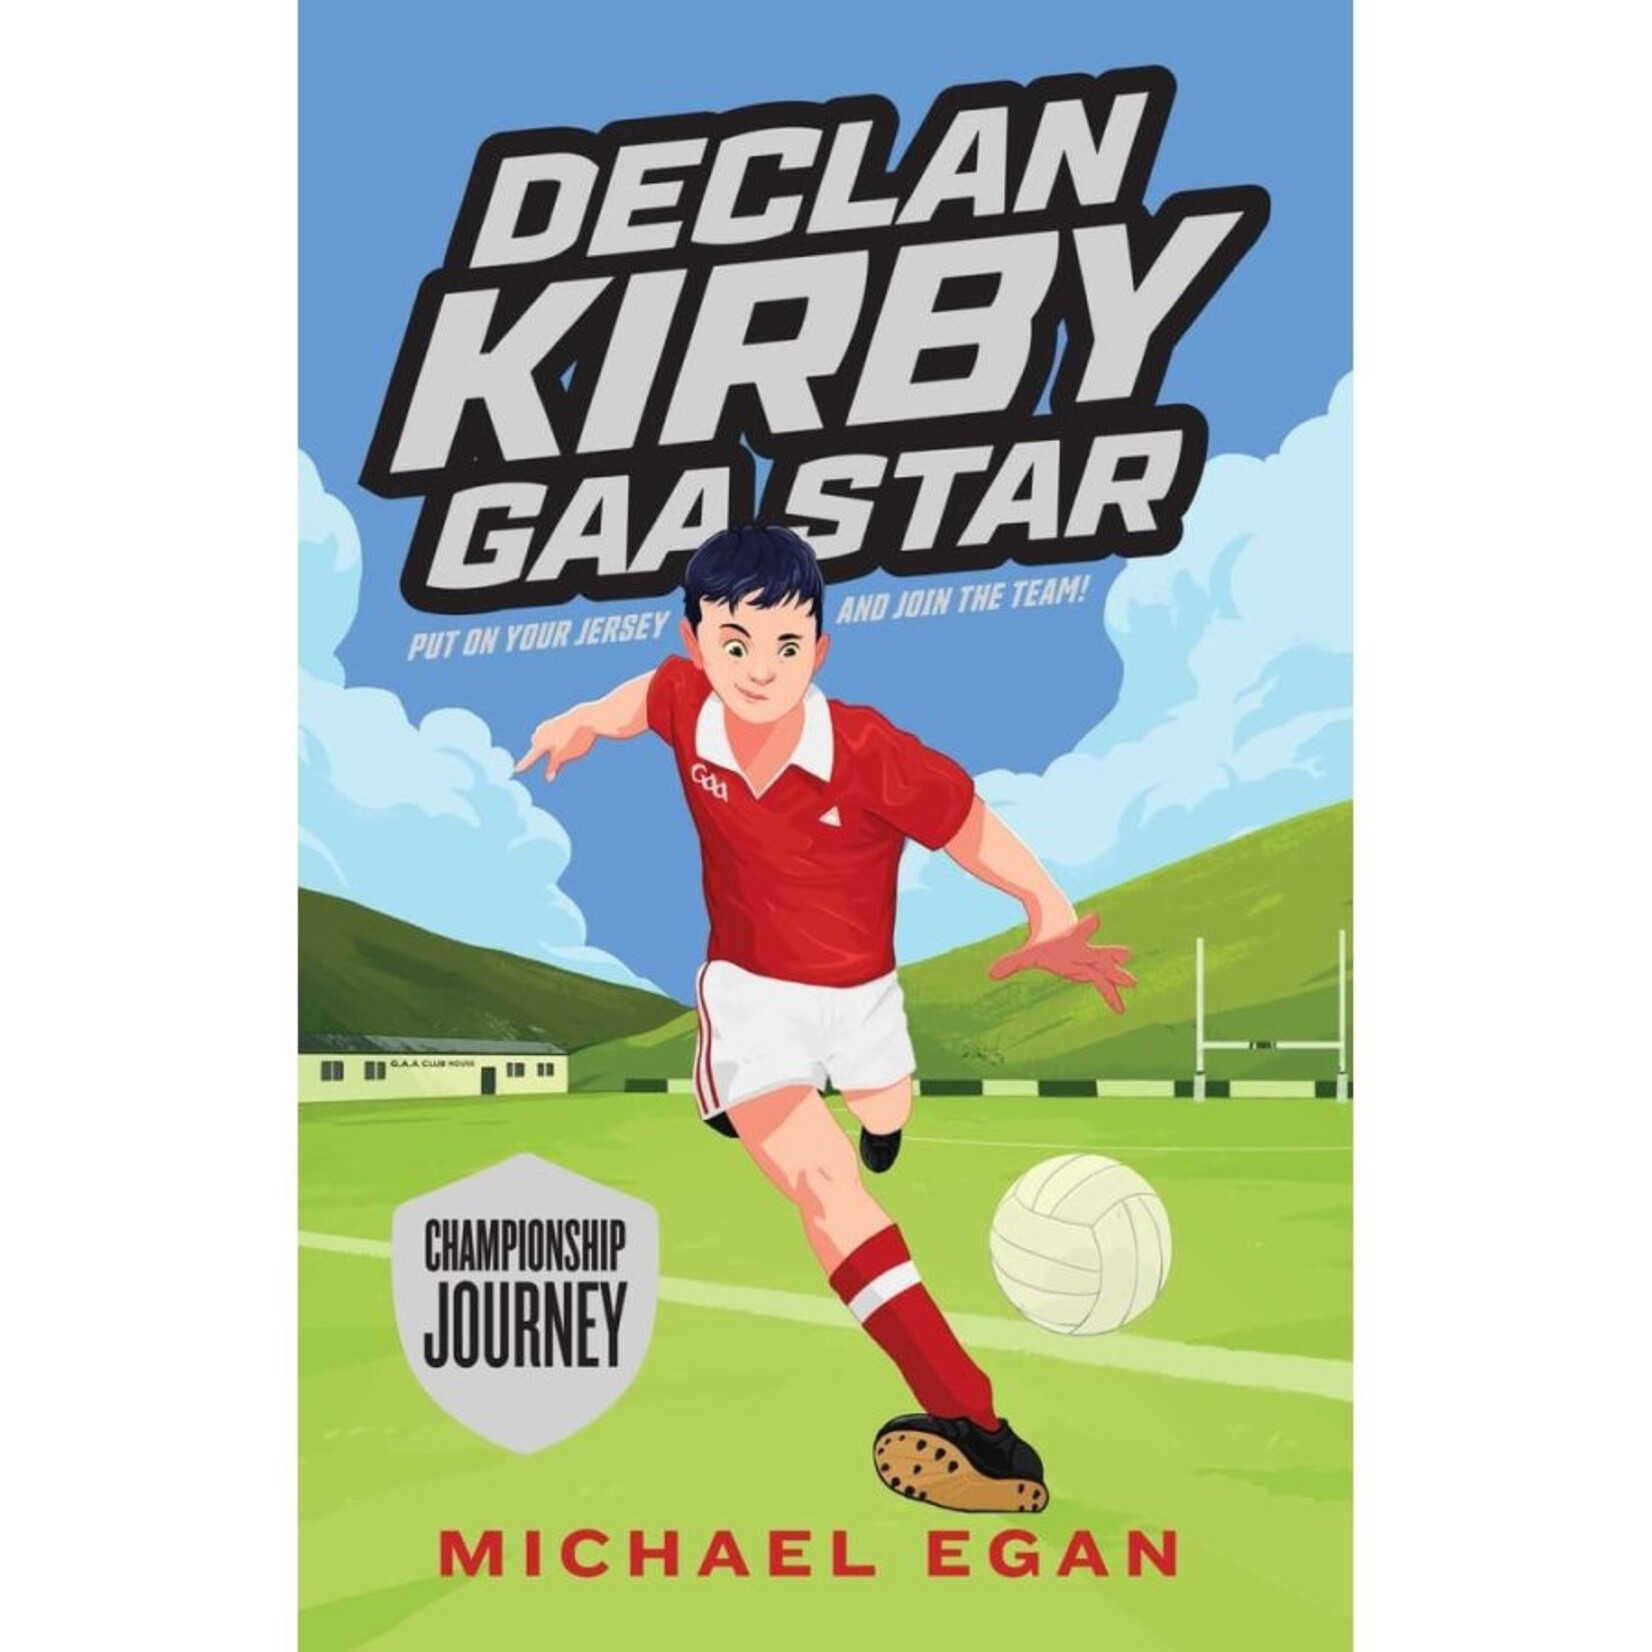 Celtic Books "Declan Kirby GAA Star: Championship Journey"